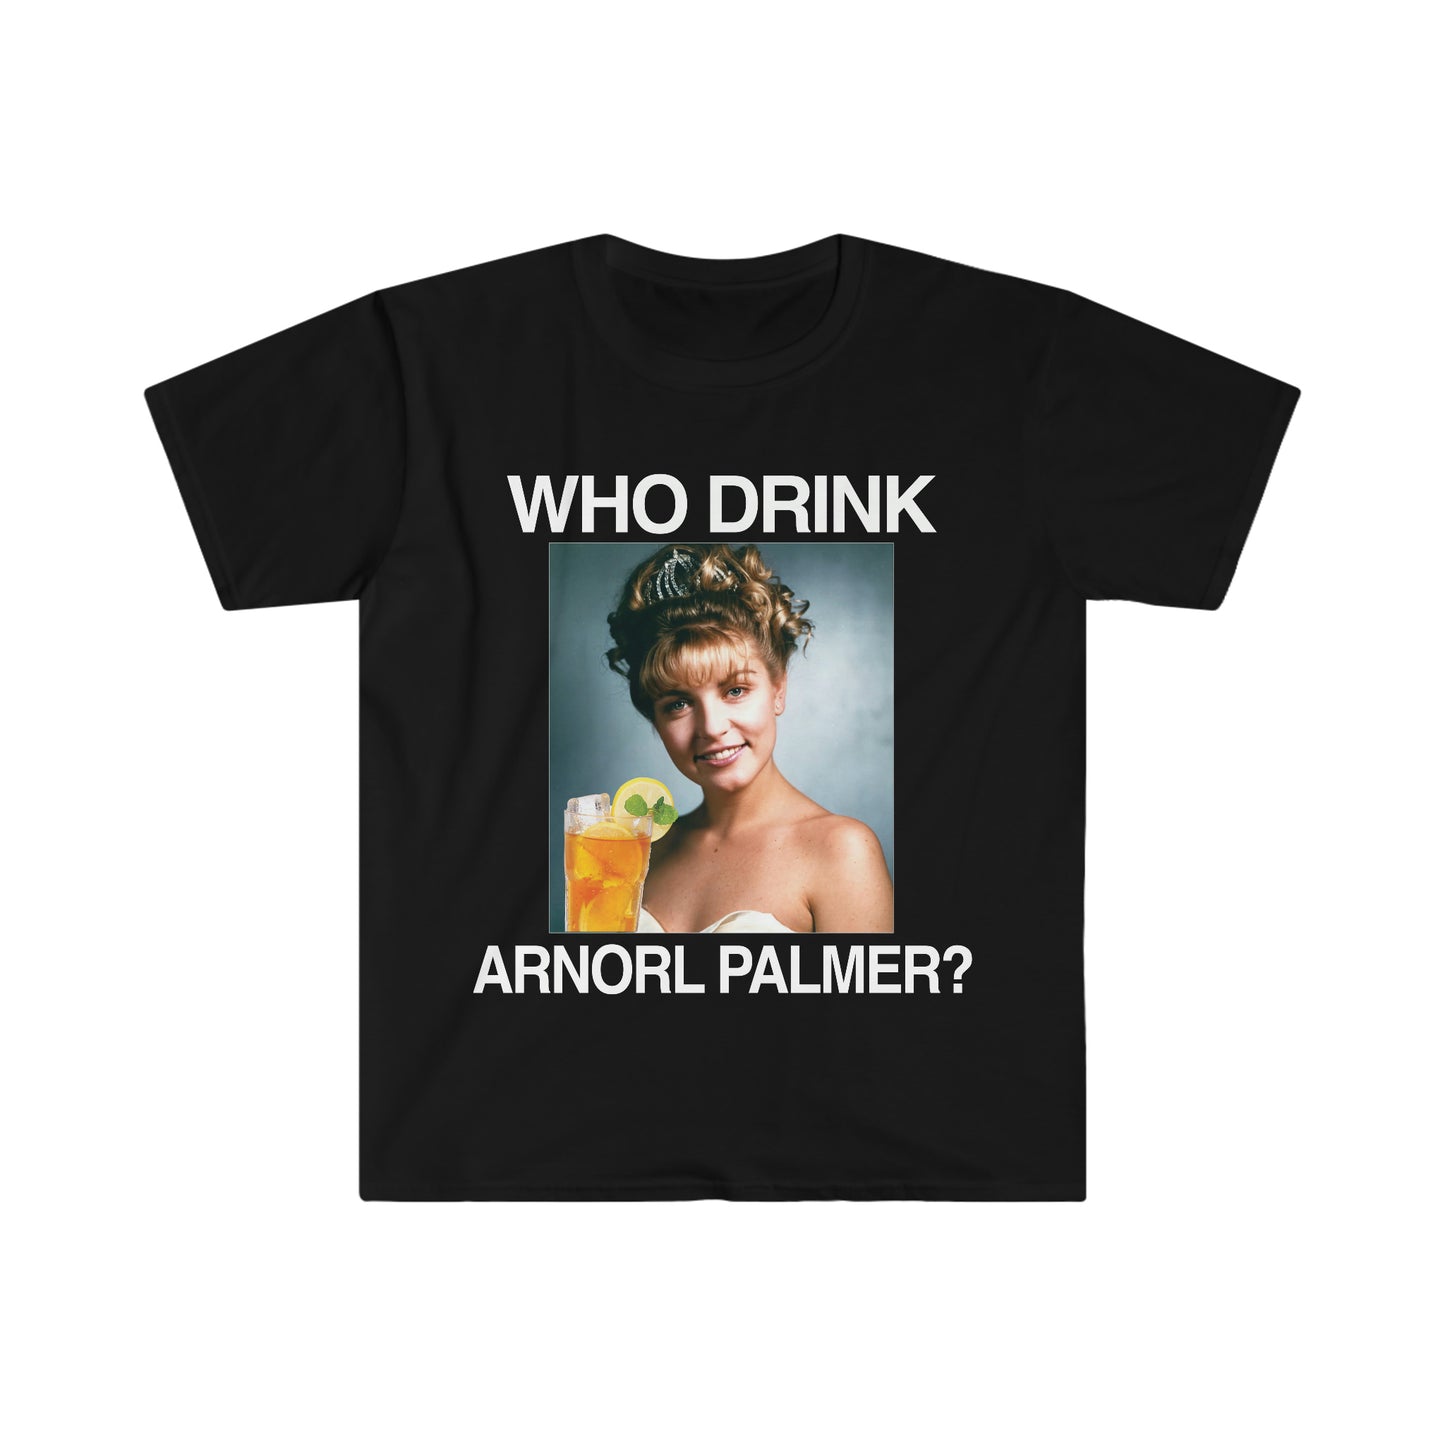 Who Drink Arnorl Palmer?